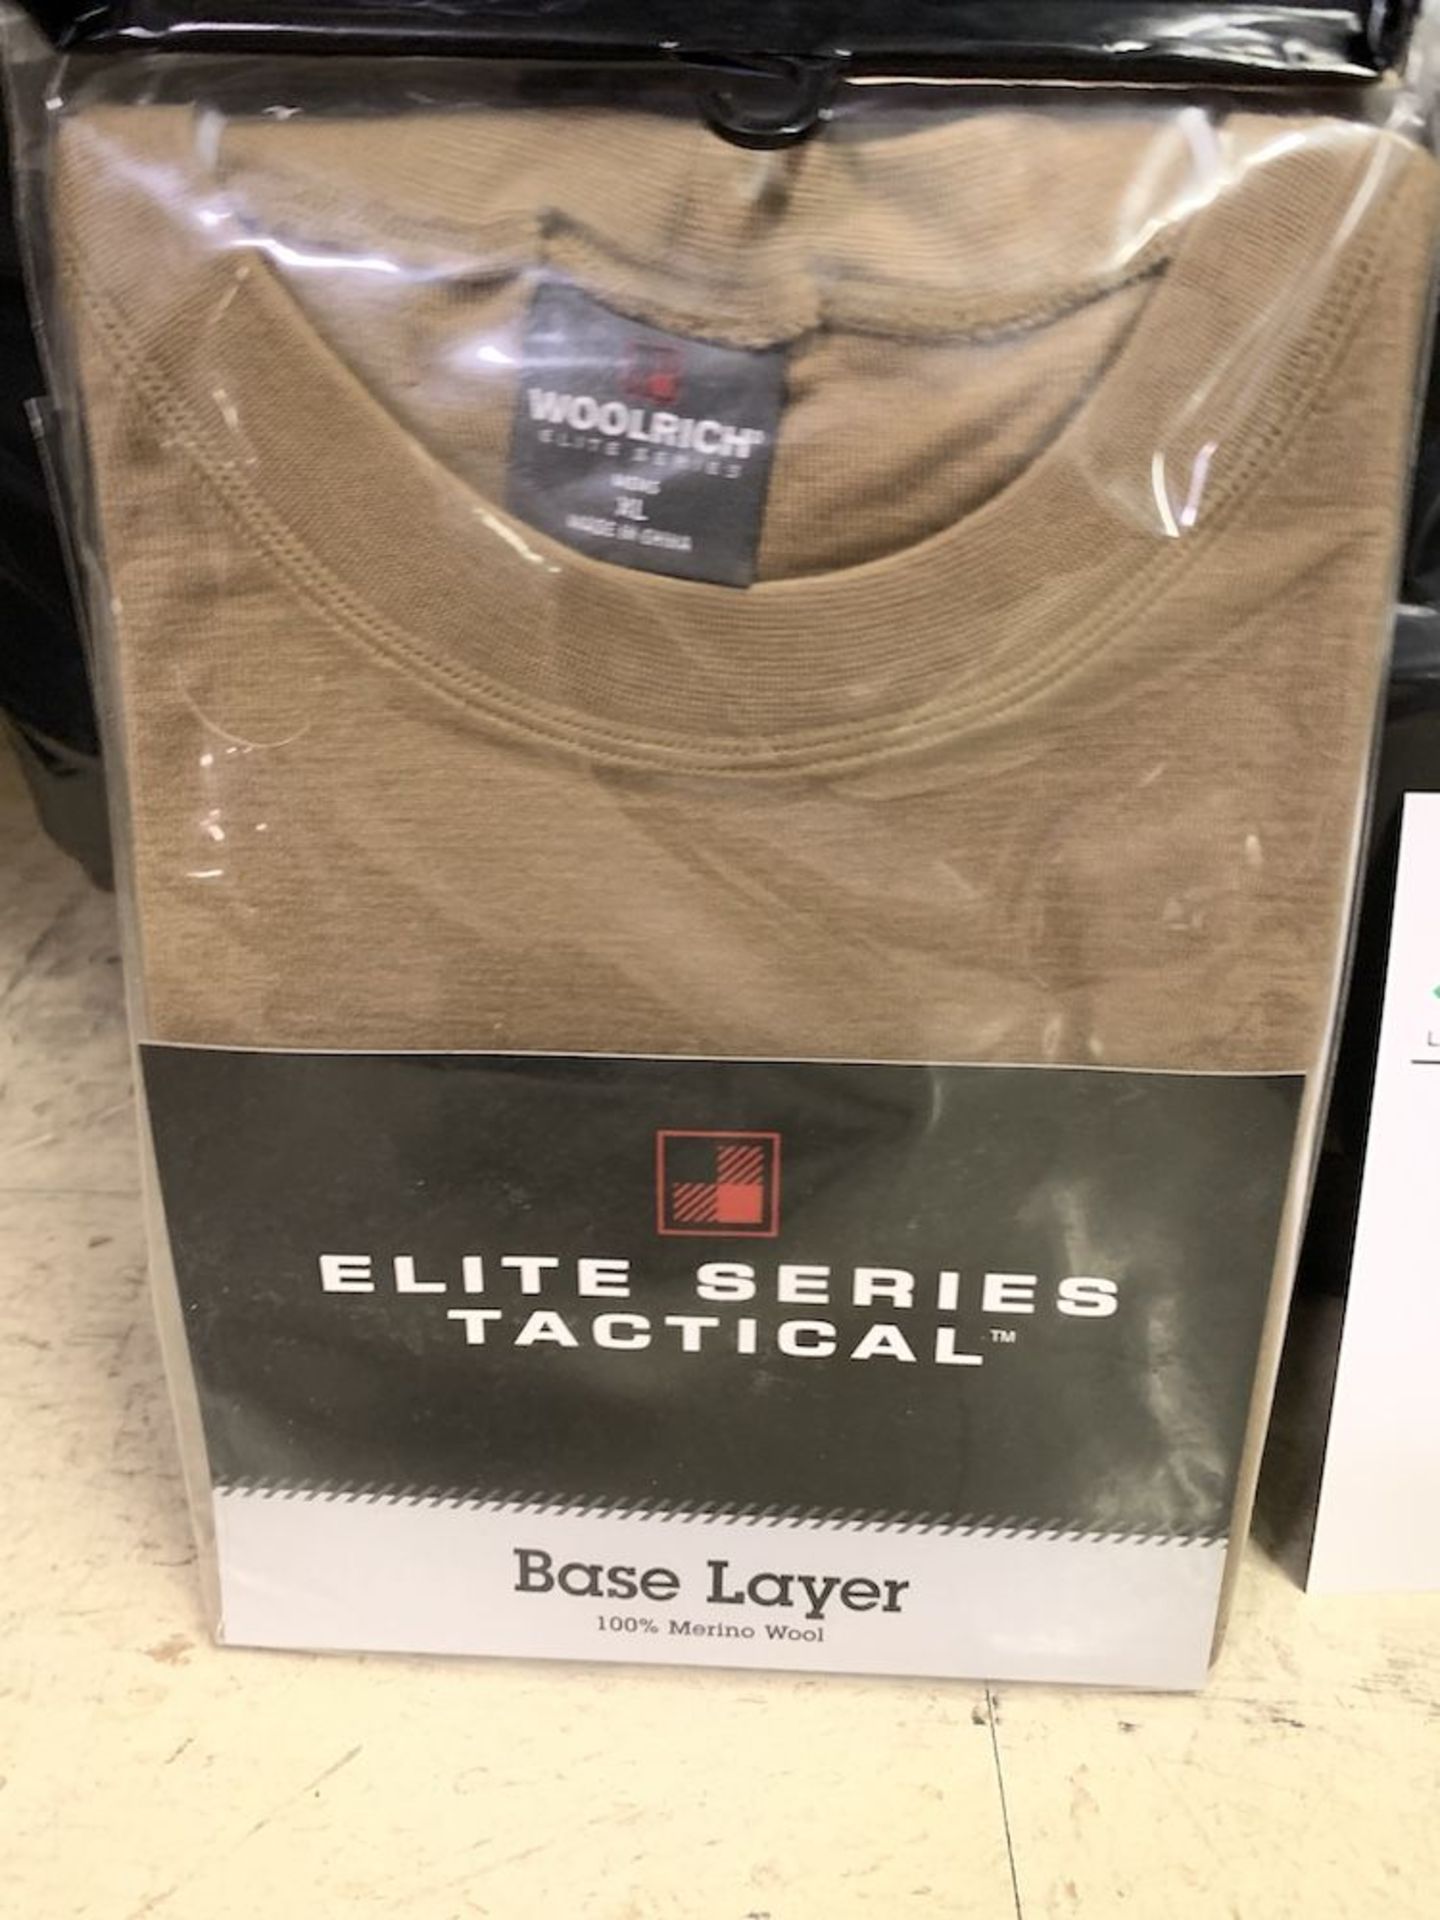 50 Elite Series Tactical Base Layer Short Sleeve Shirts, New in Packaging, Brown, Merino Wool, - Image 4 of 5